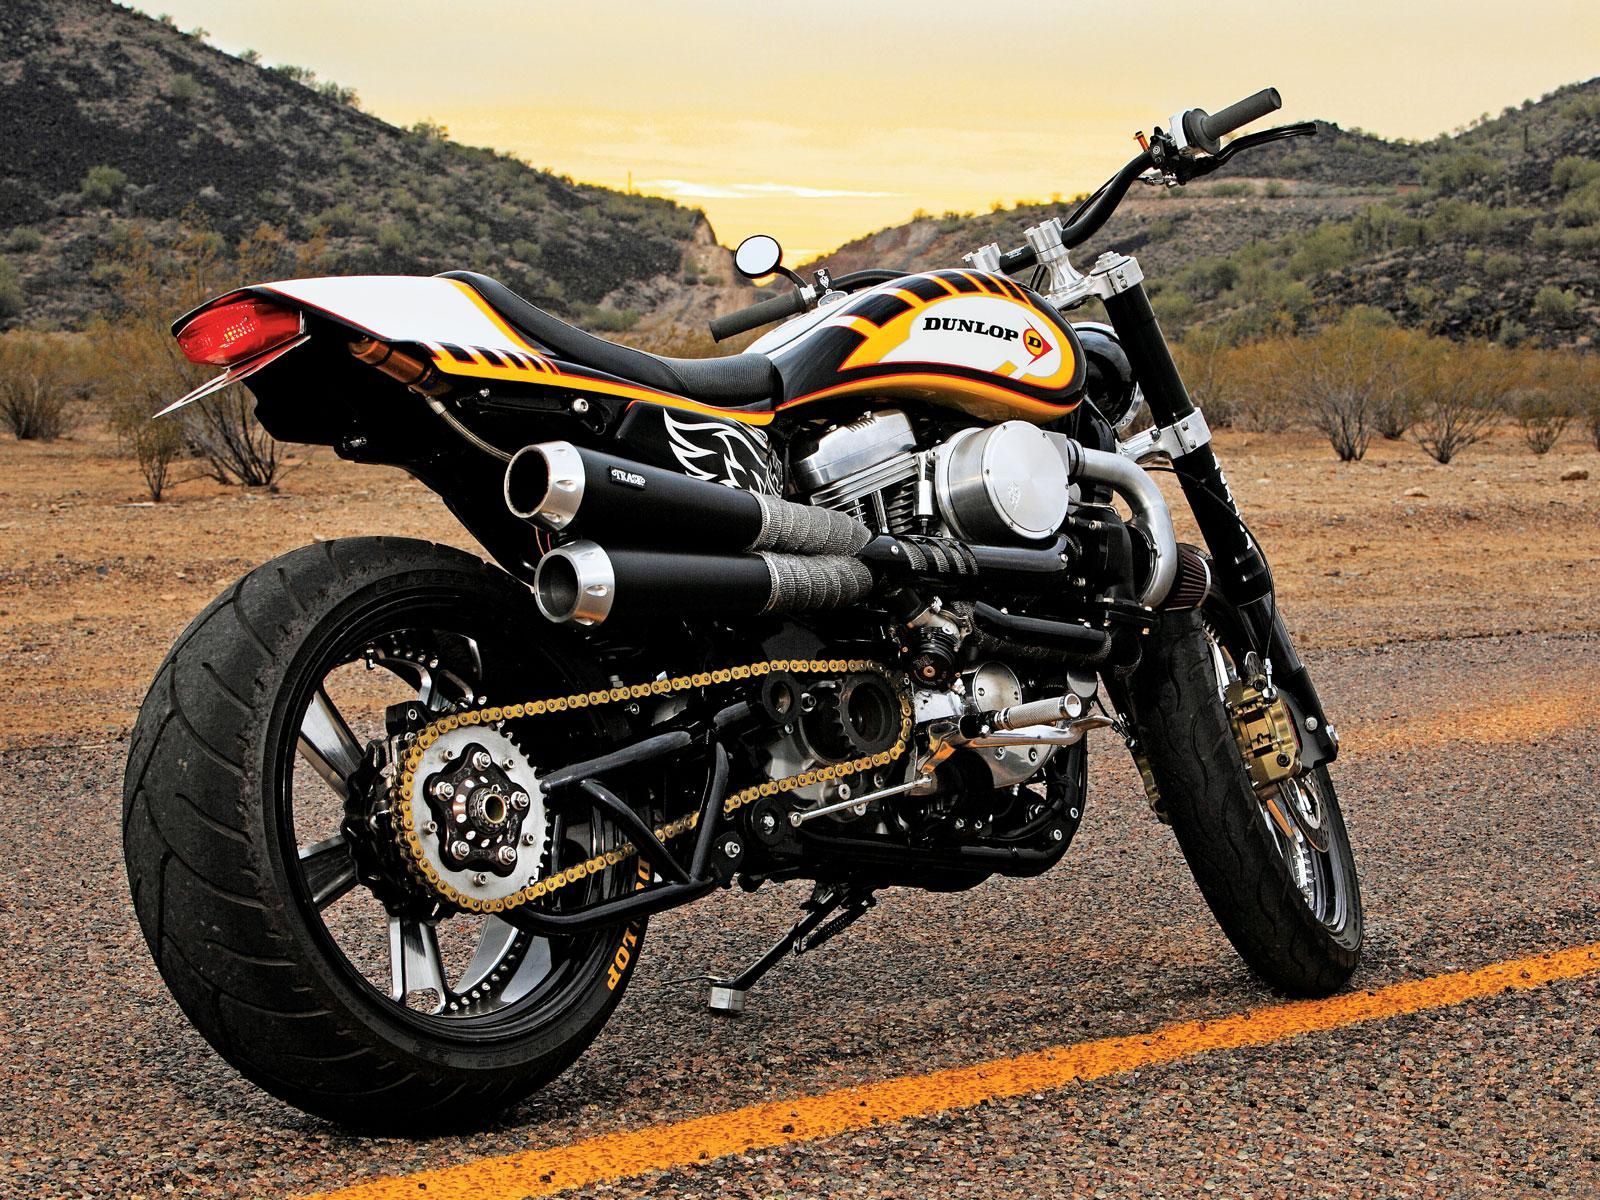 Custom Bike Of Harley Davidson Bike Wallpapers | Daily Pics Update ...